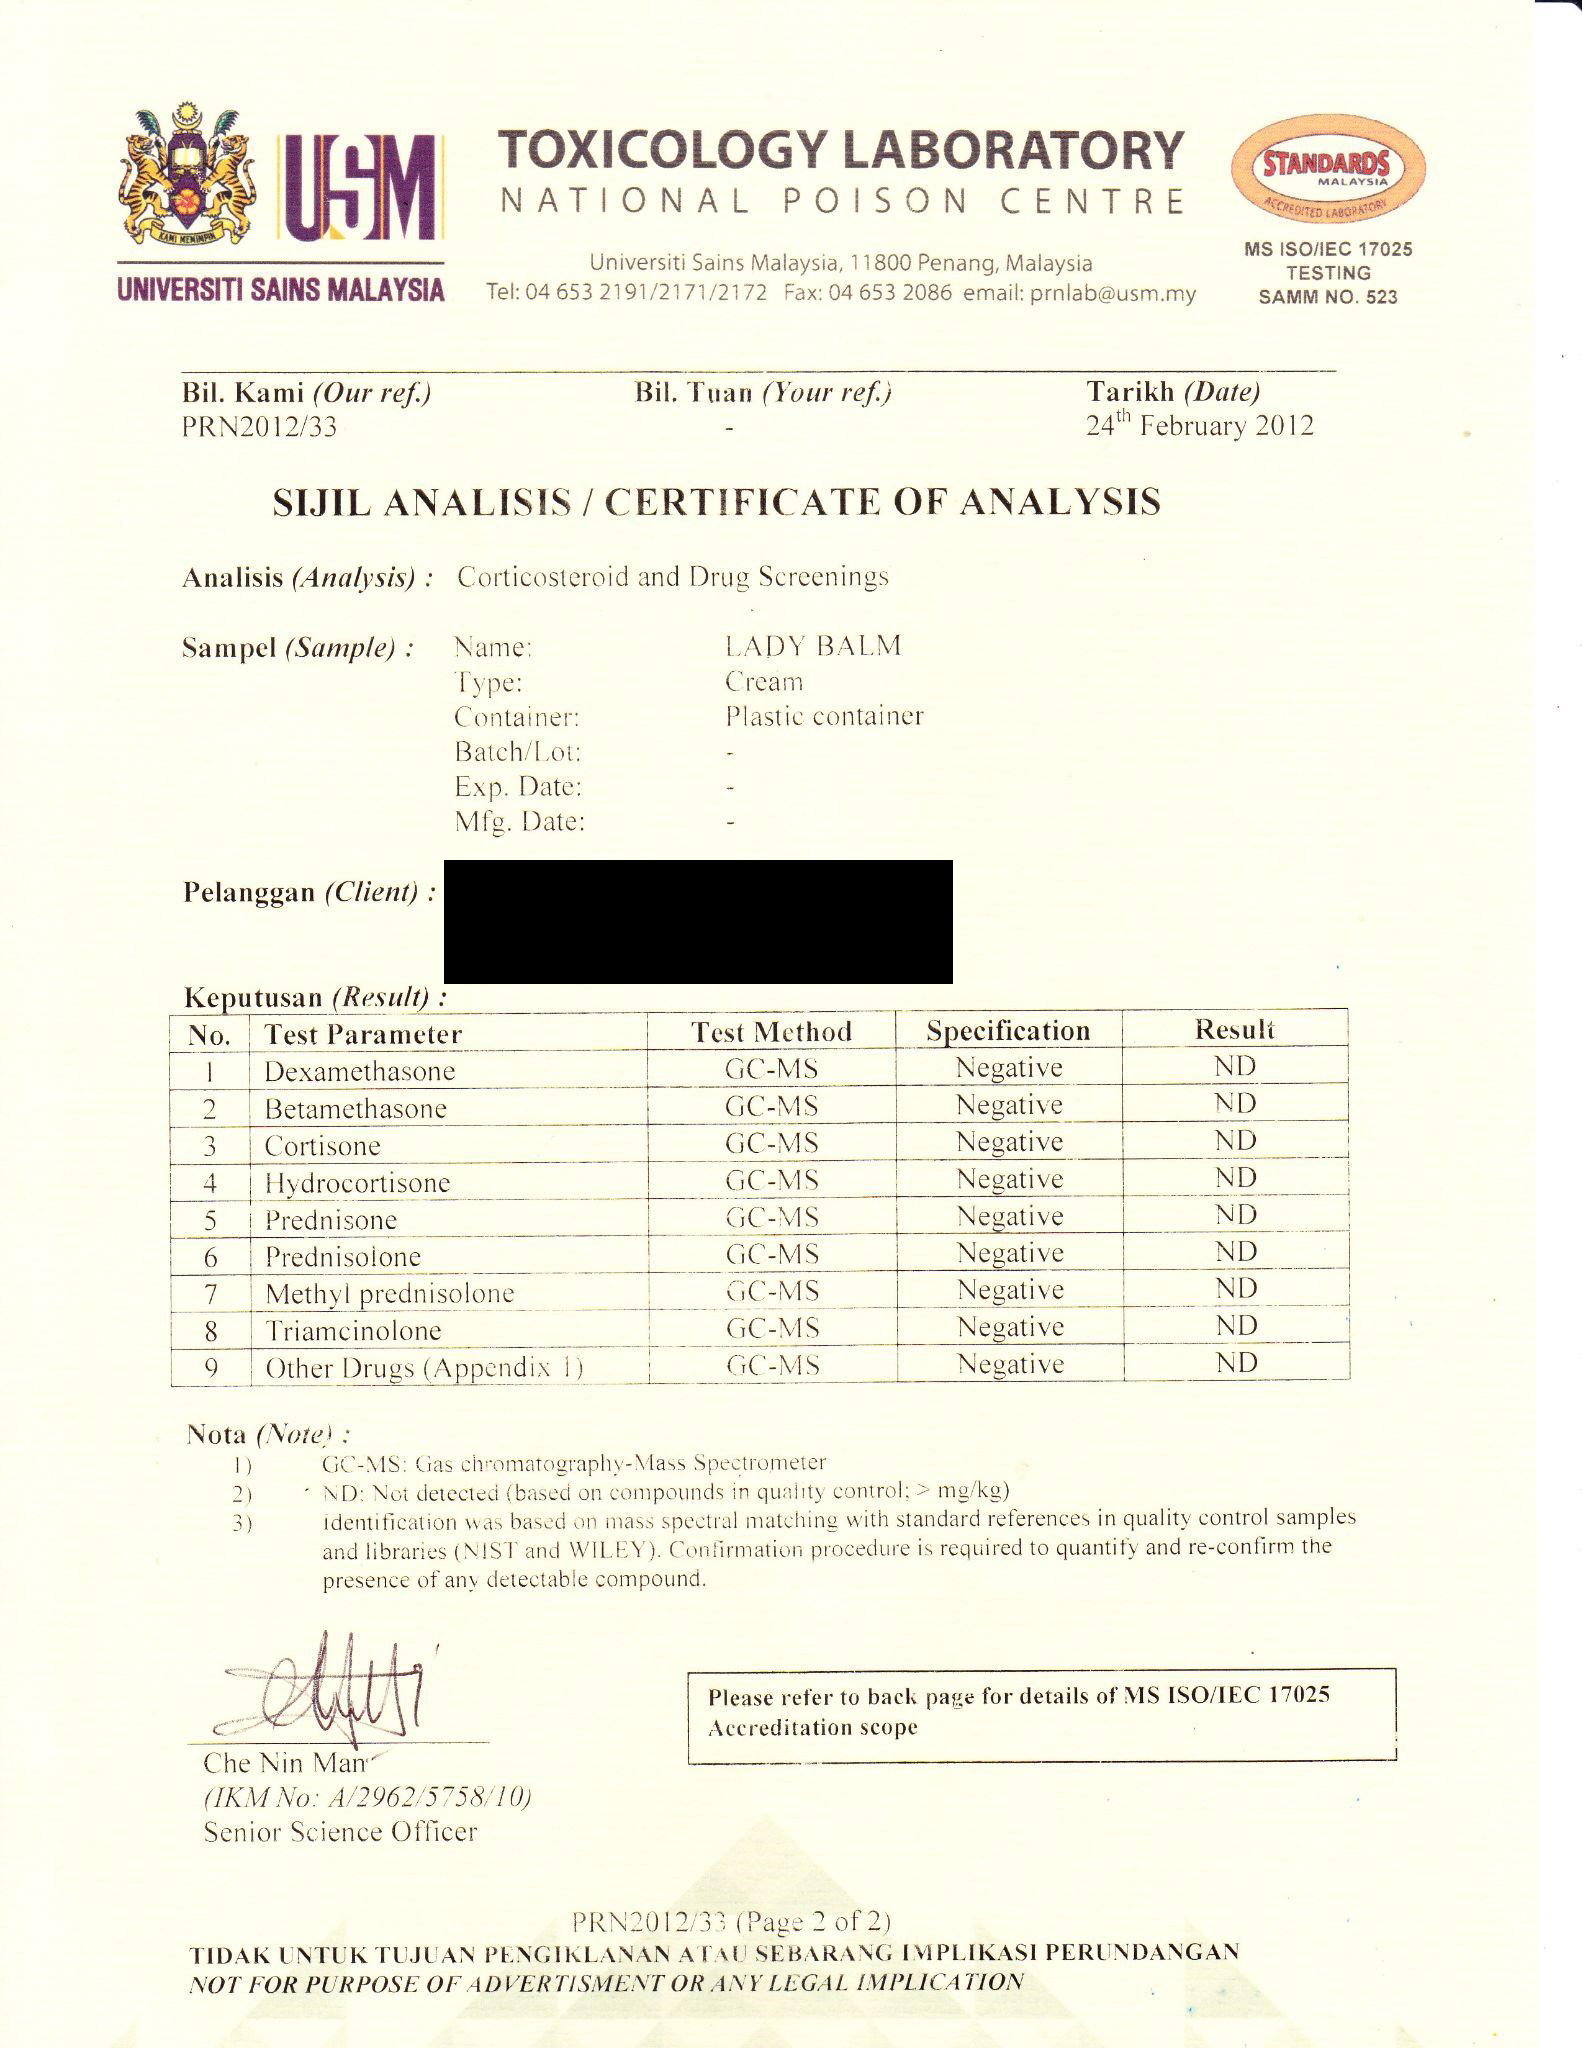 COA - Certificate of Analysis